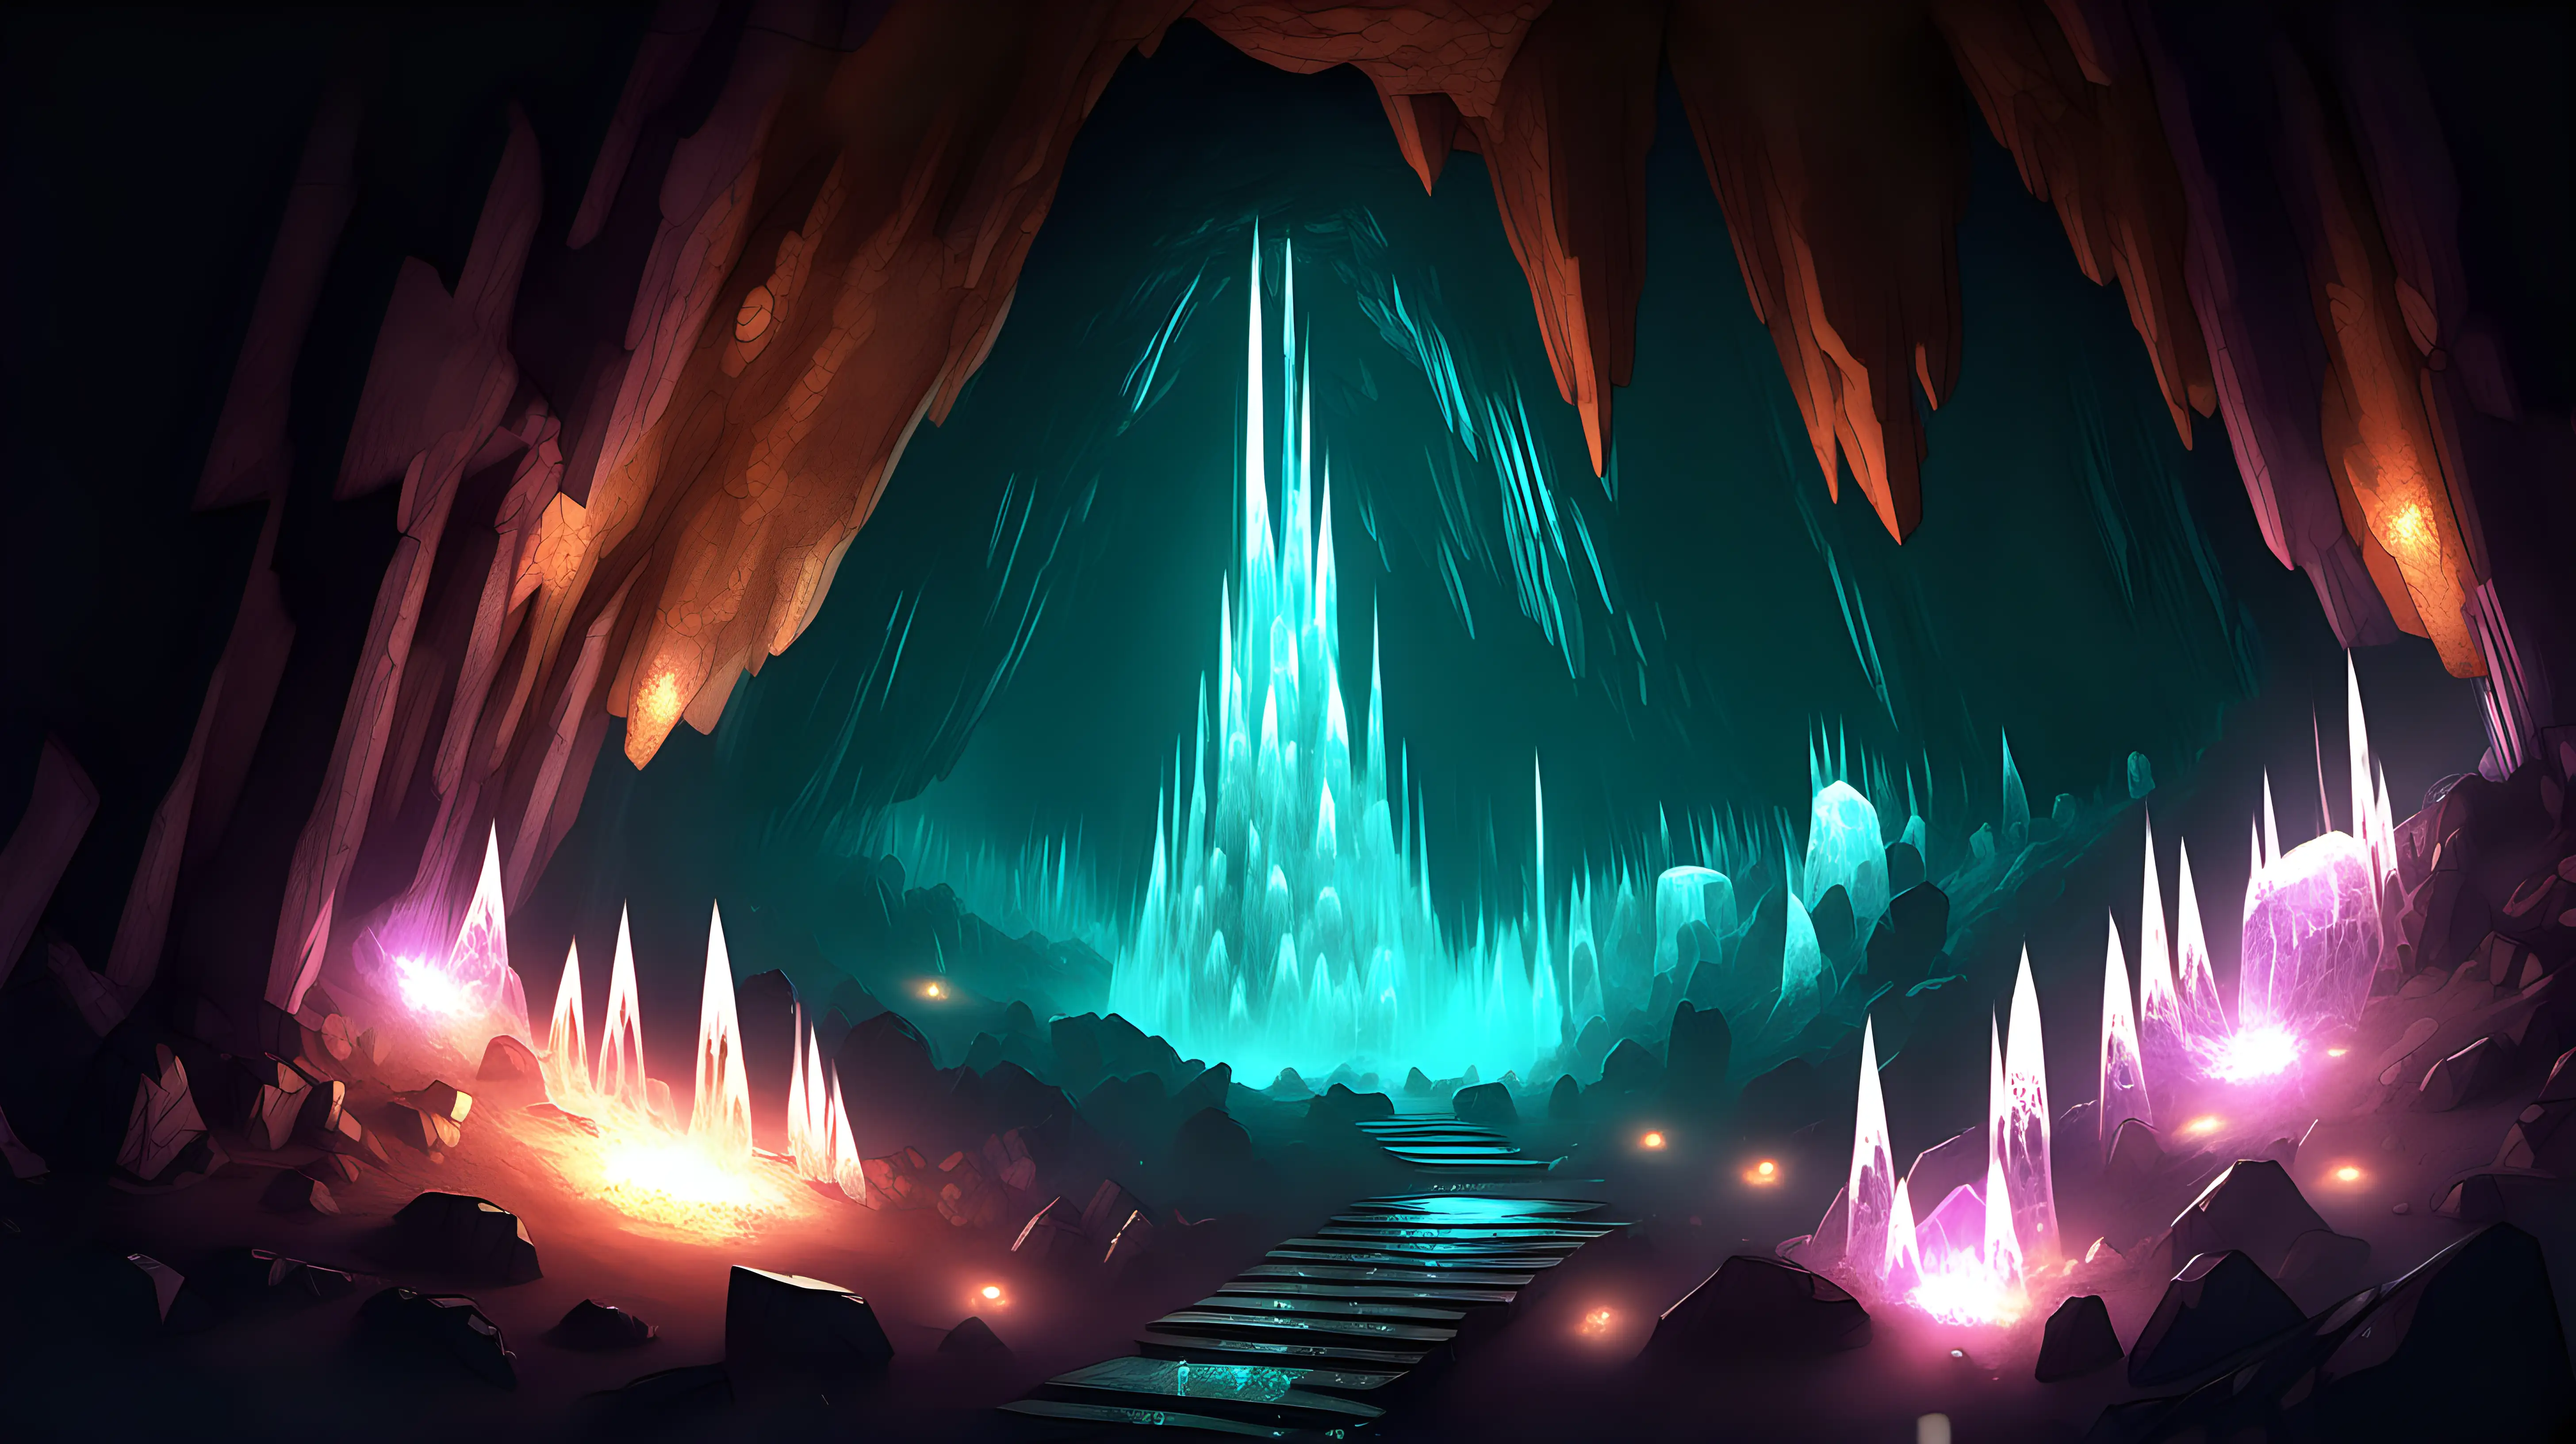 Glowing Crystal Caverns Subterranean Beauty Illuminated